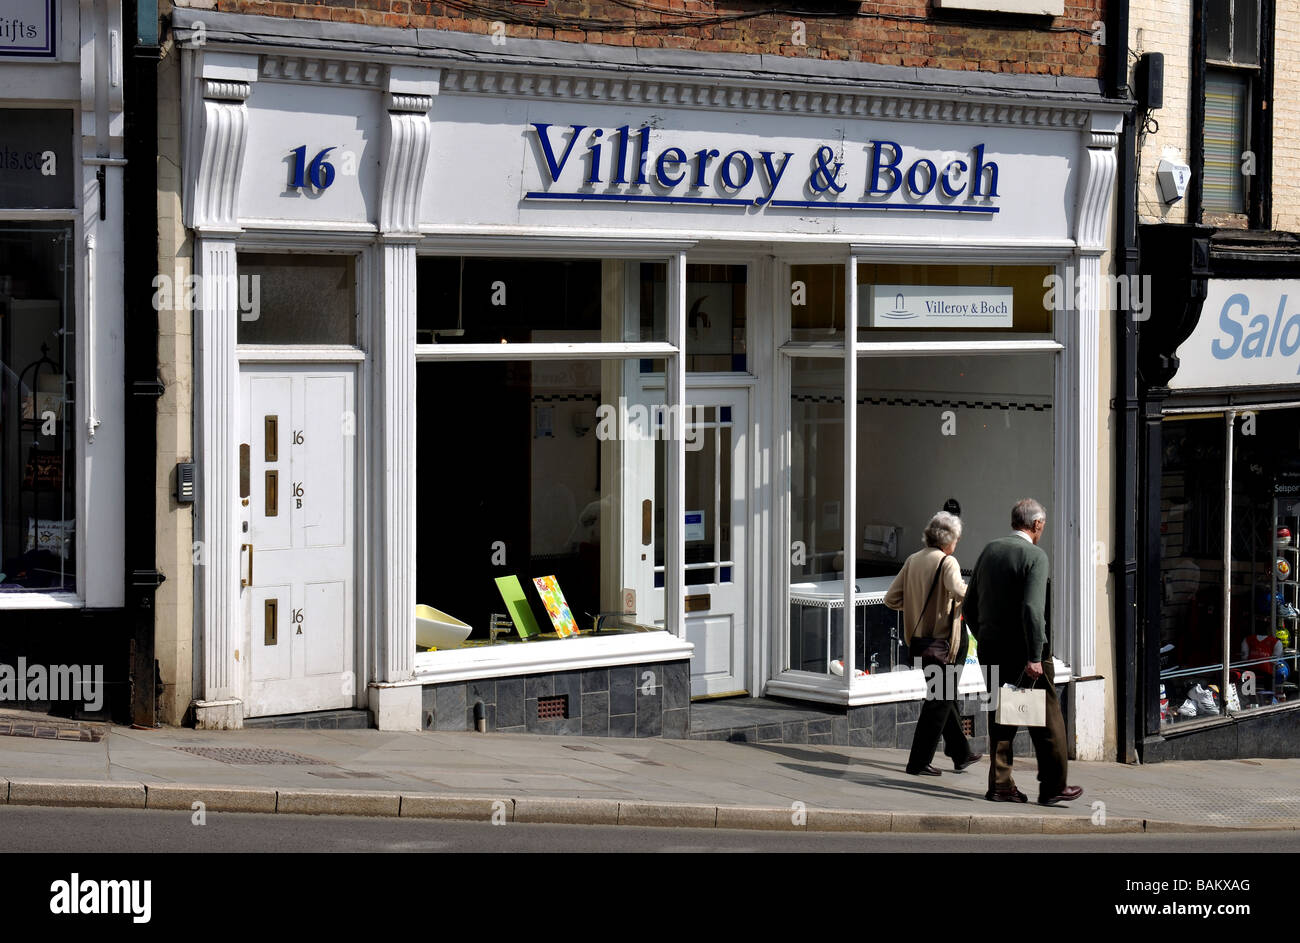 Villeroy and Boch shop, Shrewsbury, England, UK Stock Photo